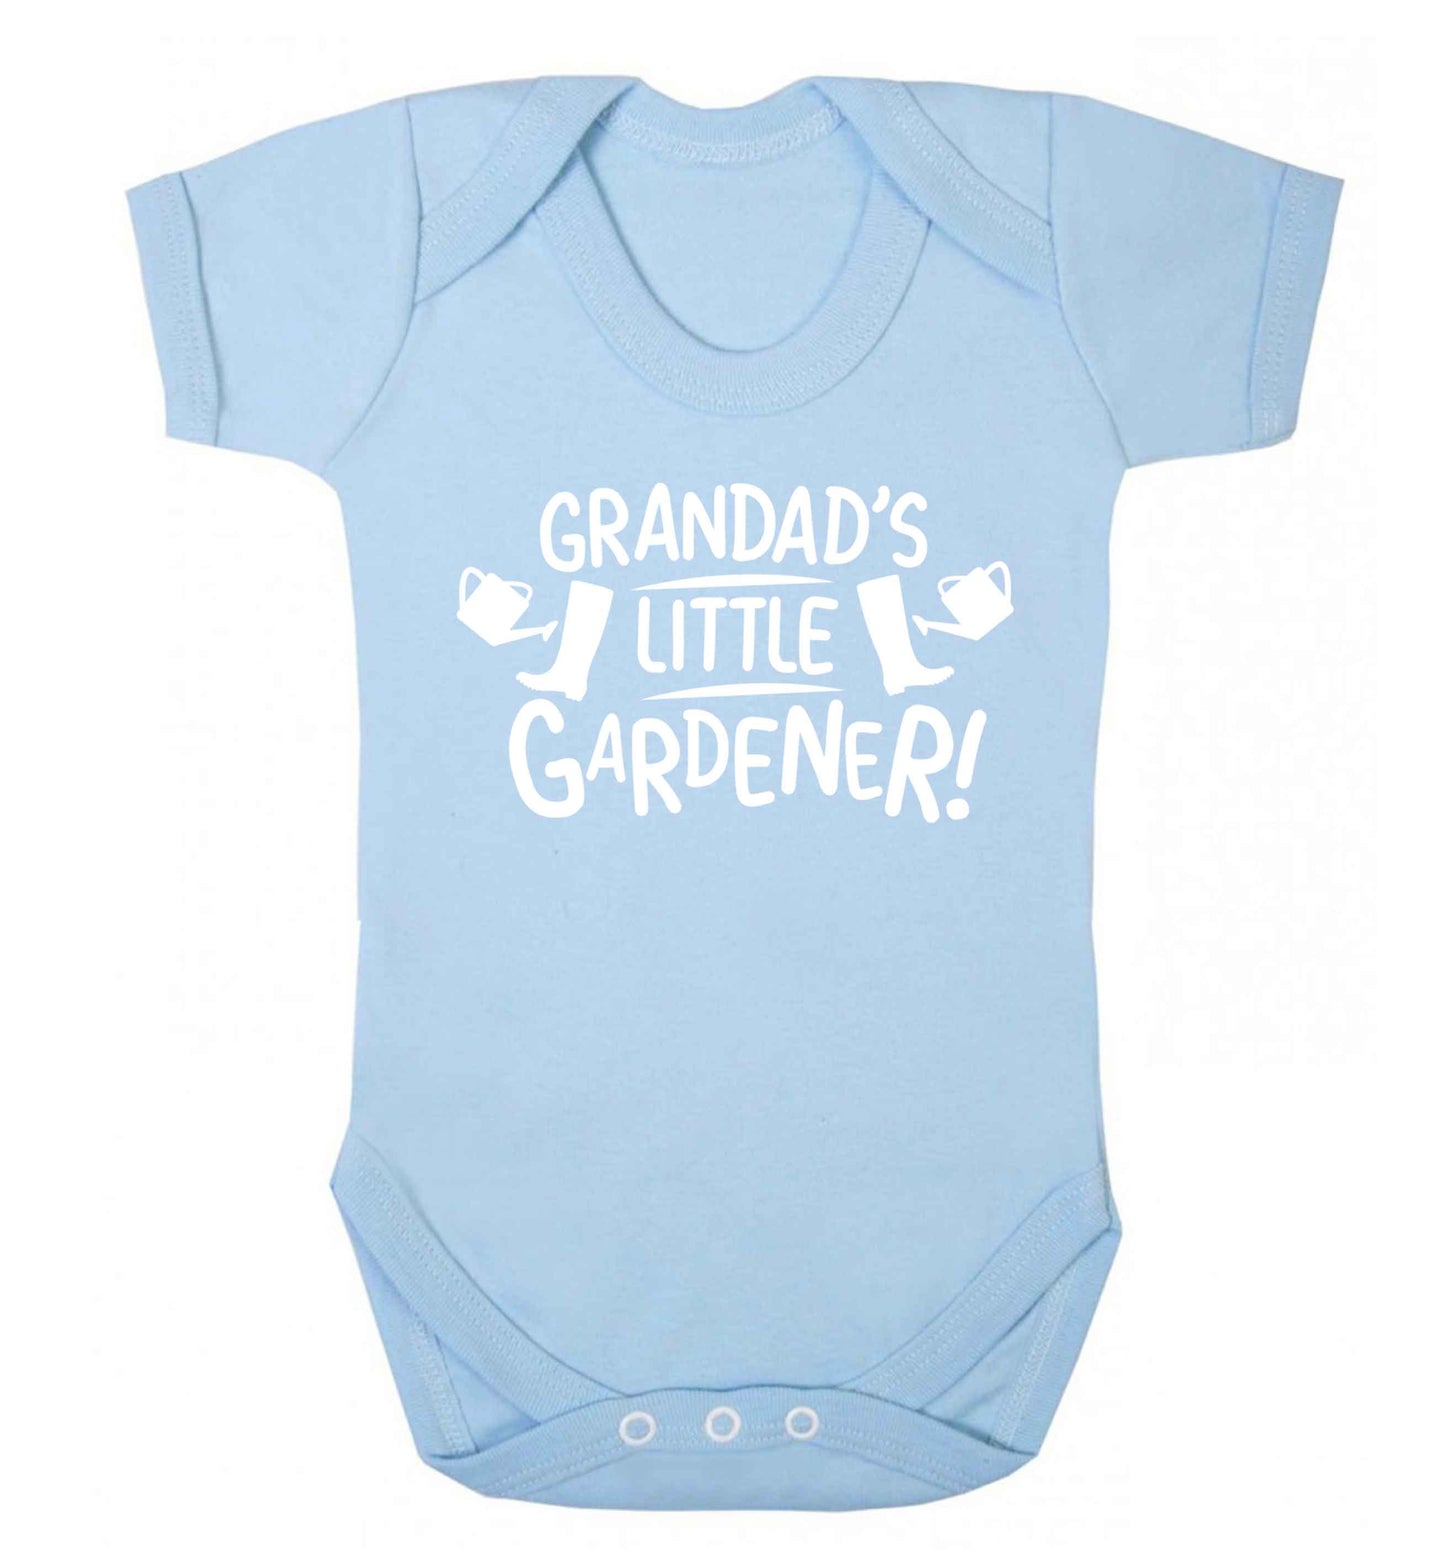 Grandad's little gardener Baby Vest pale blue 18-24 months